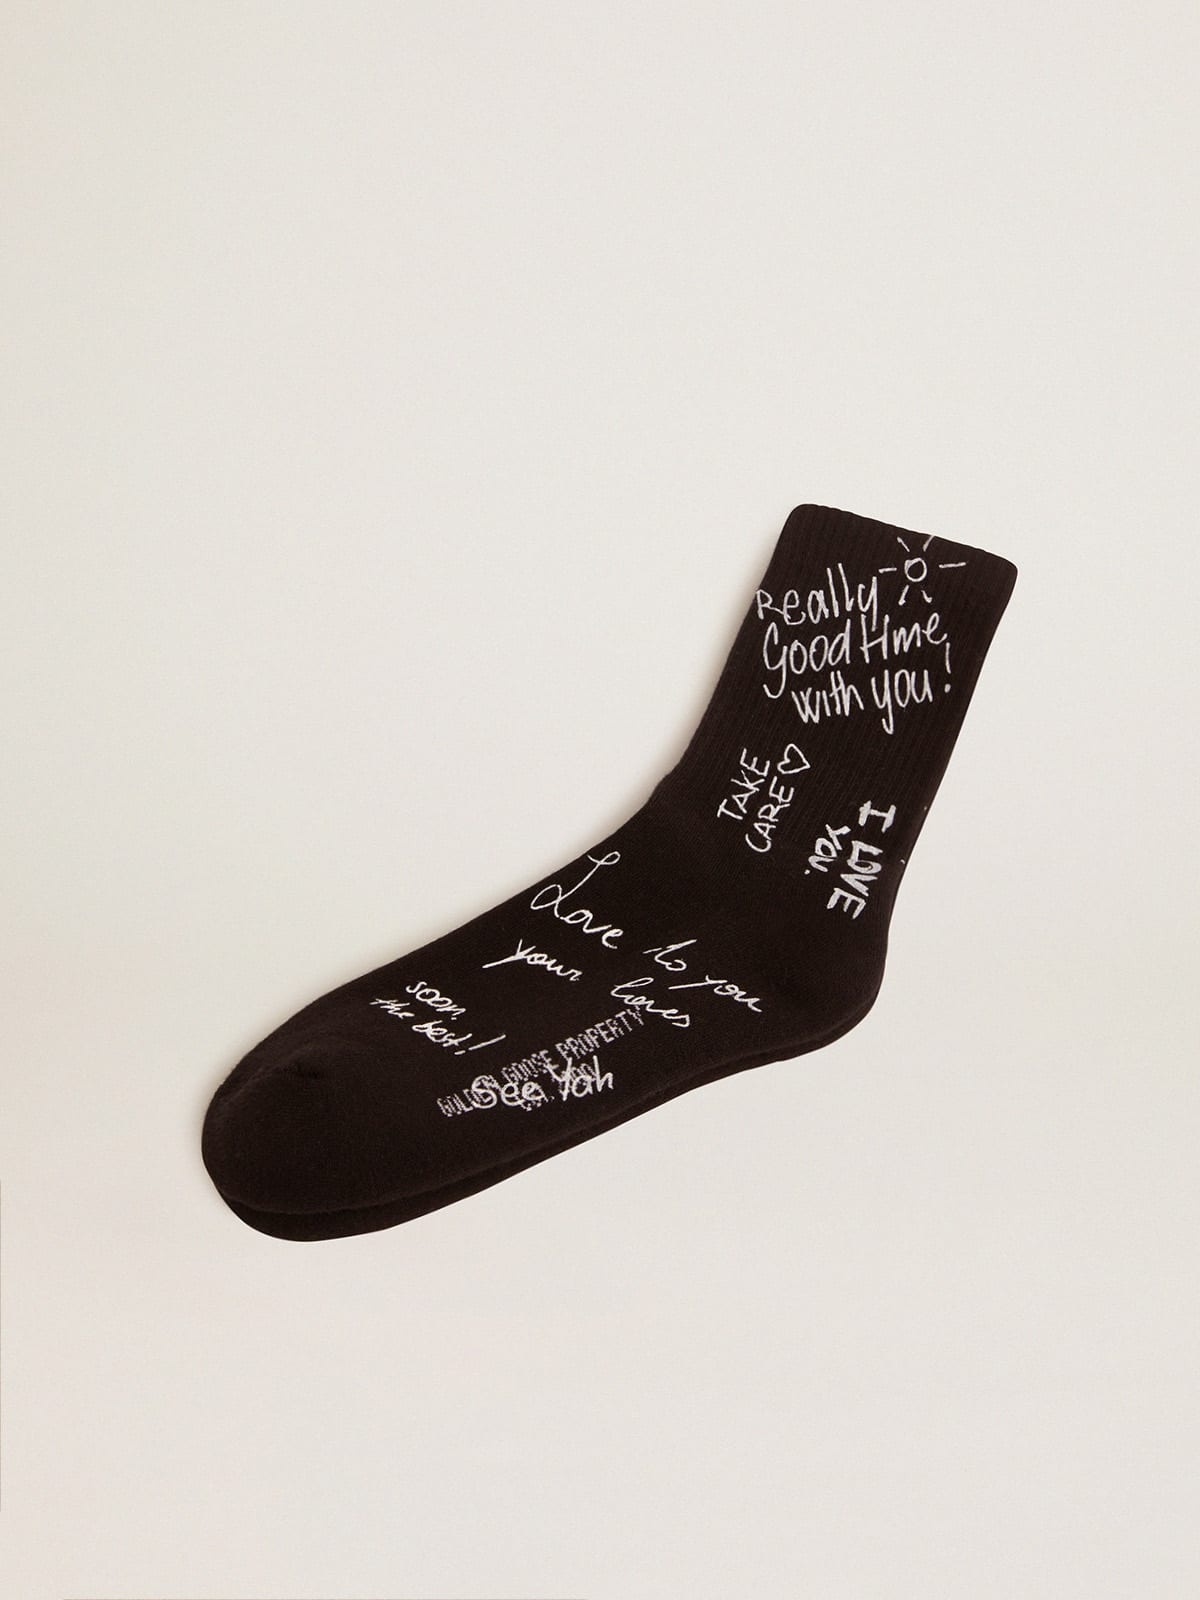 Black socks with white Golden Statement lettering - 1